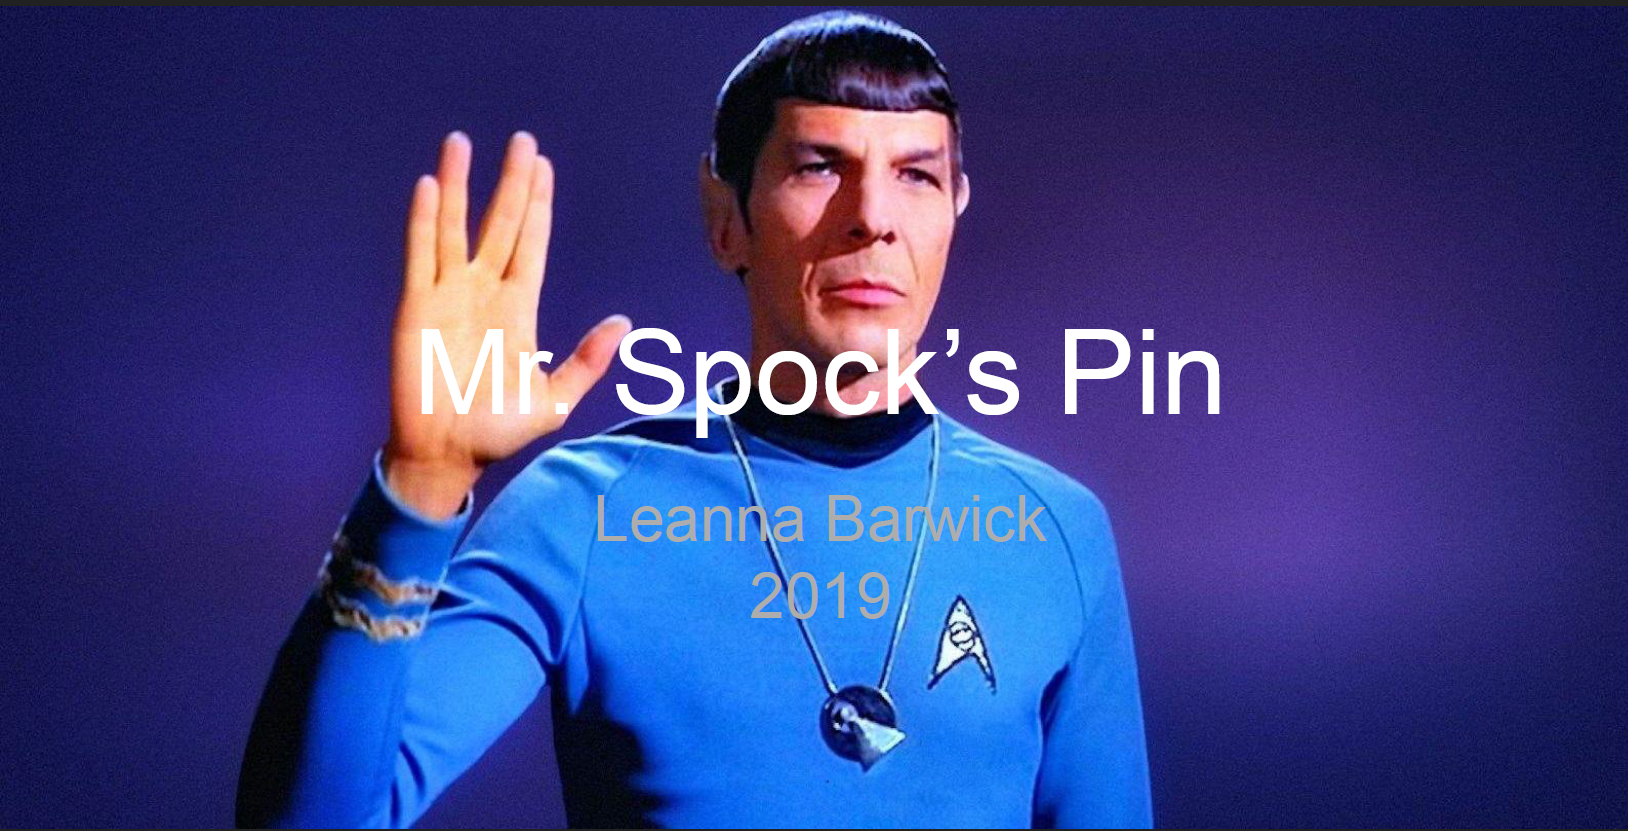 Mr Spock's Pin